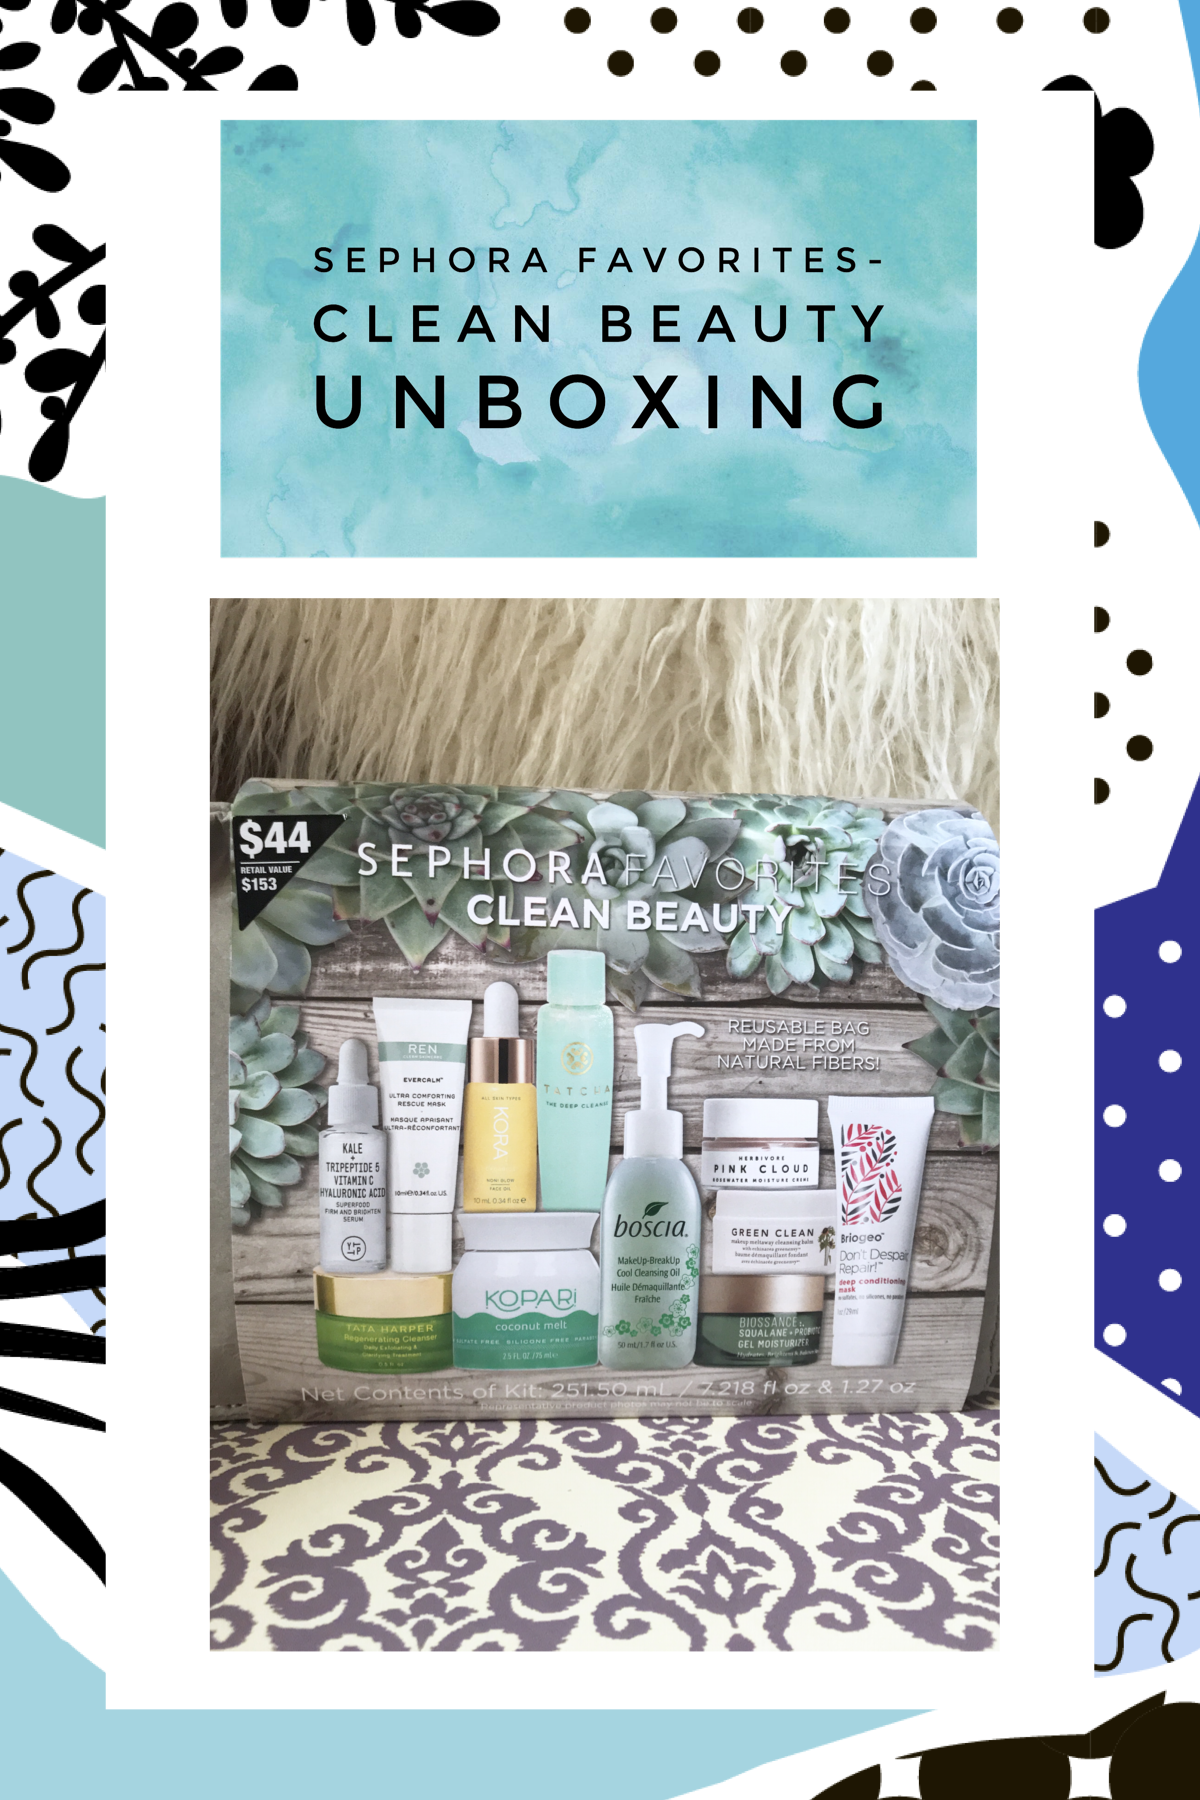 Sephora Favorites- Clean Beauty Unboxing